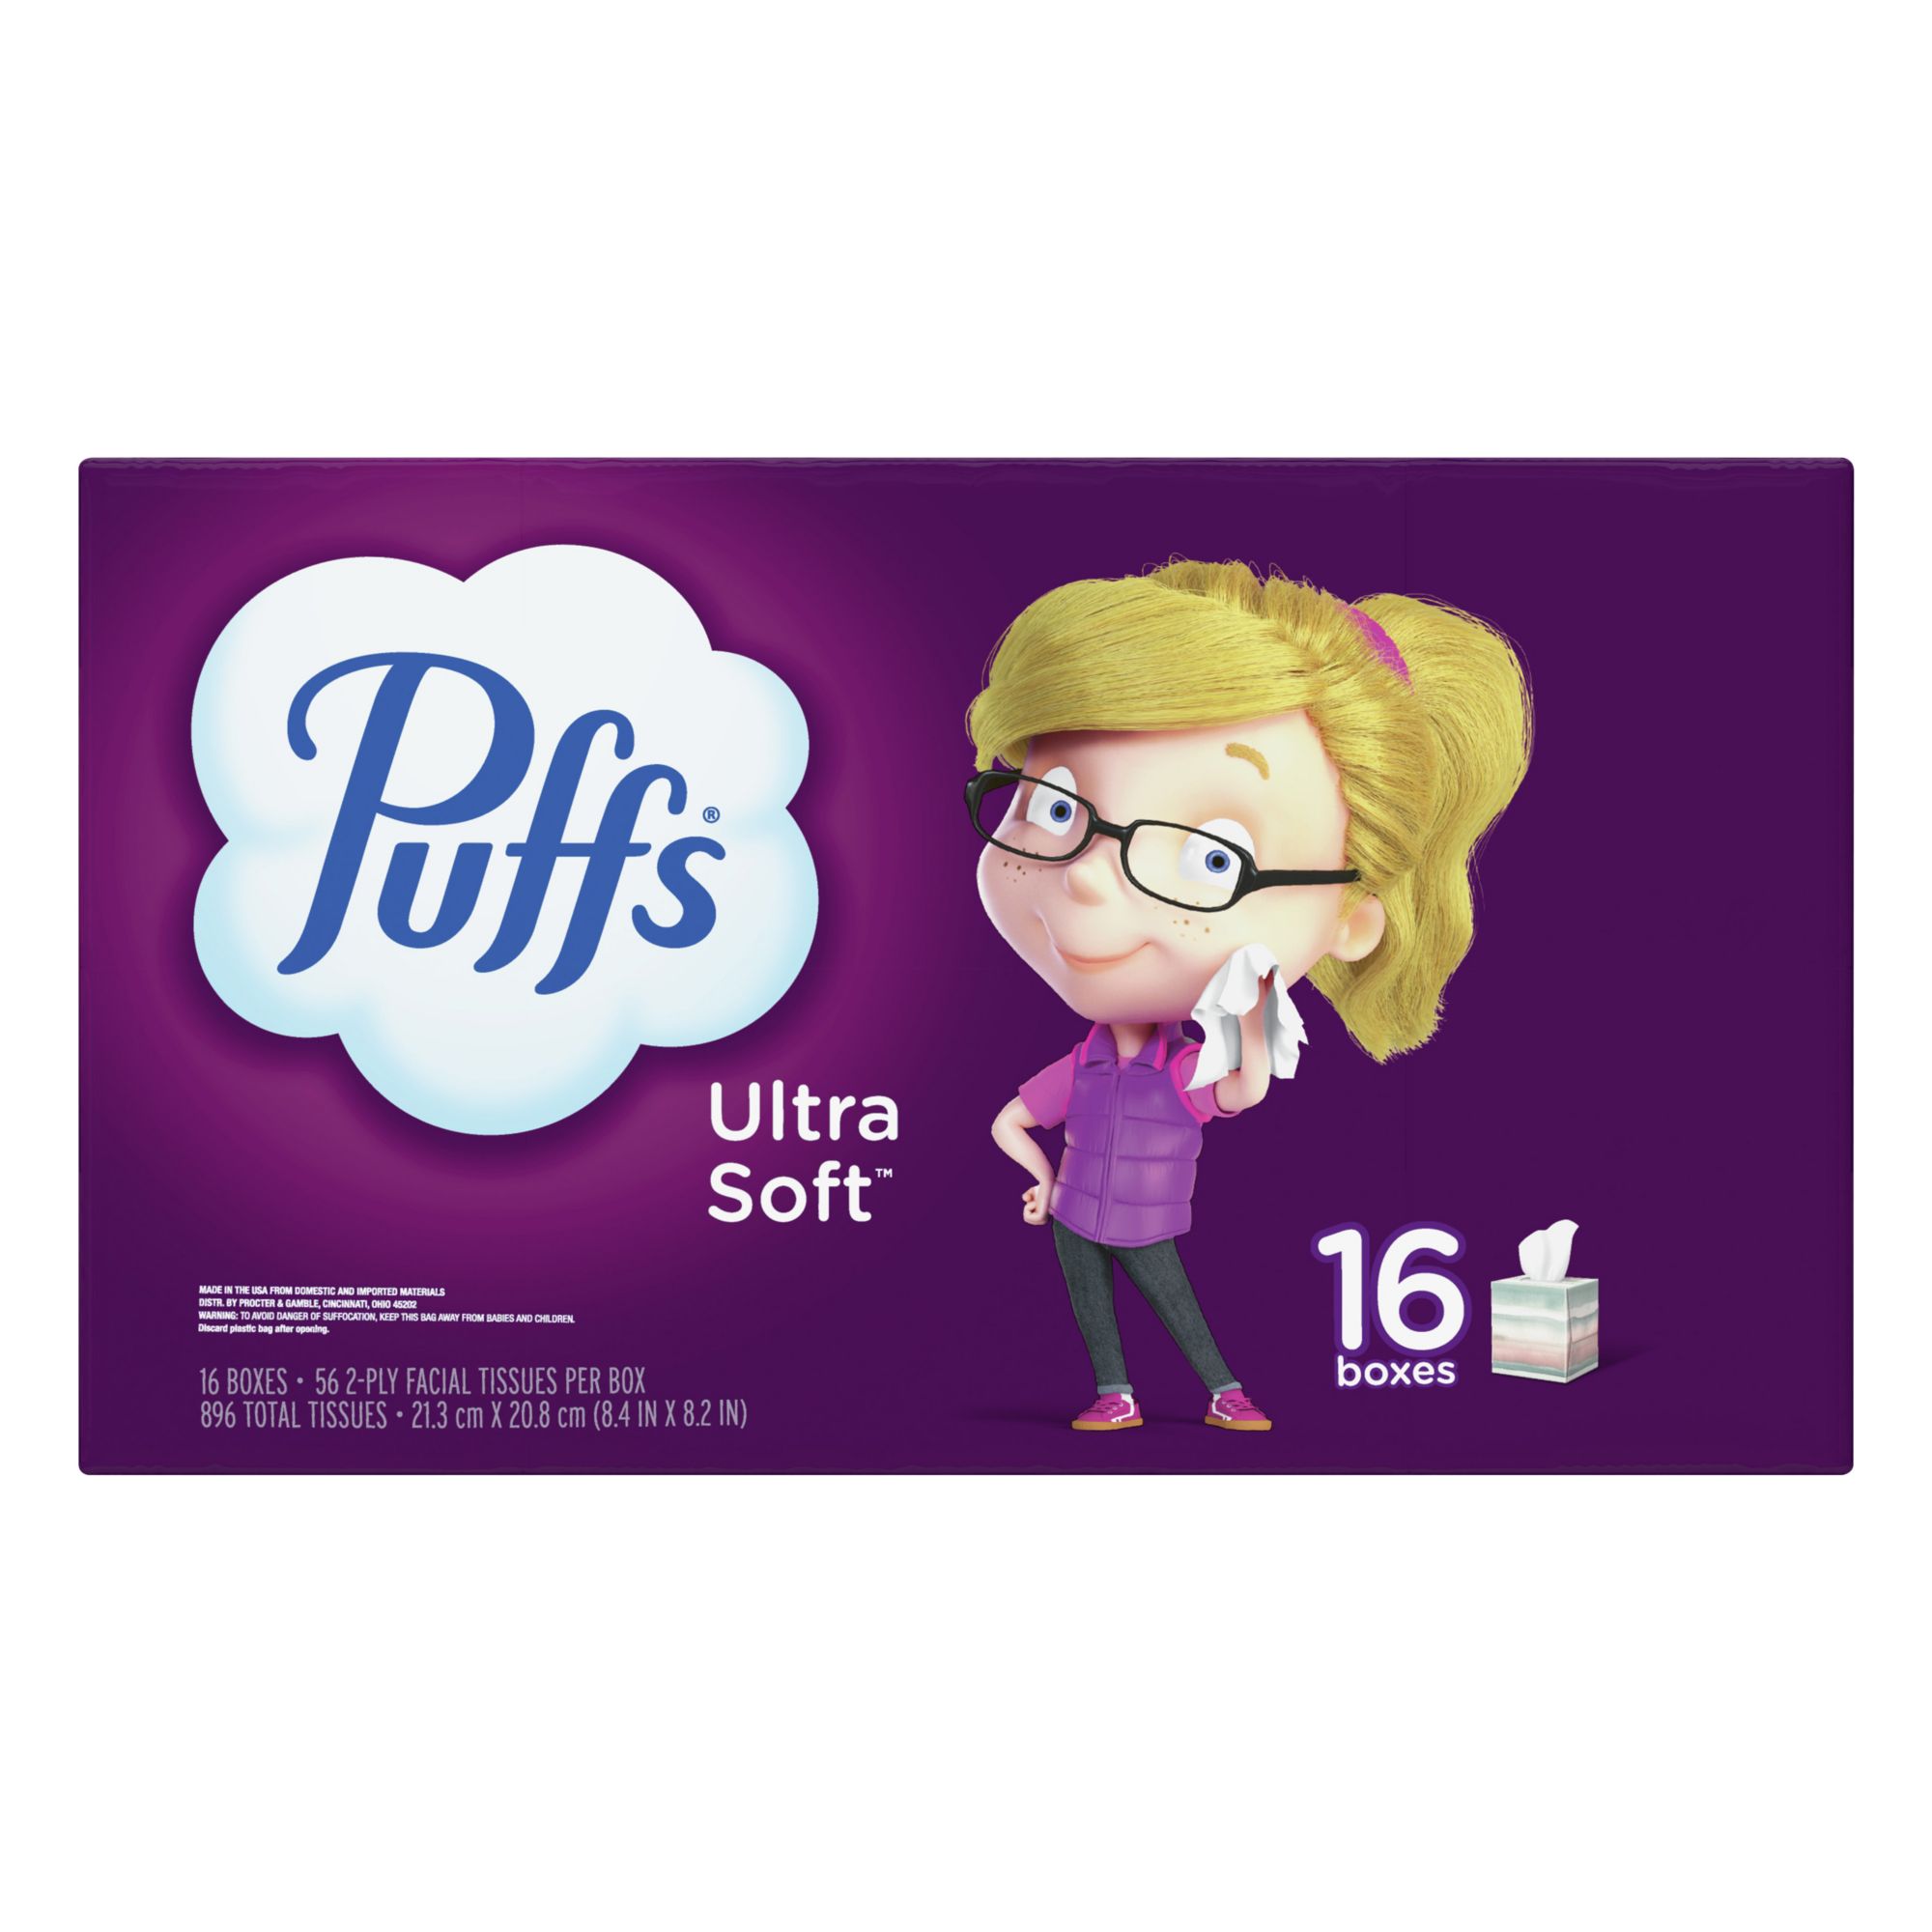 Puffs Plus Lotion Family Facial Tissues, 124 ct - Harris Teeter